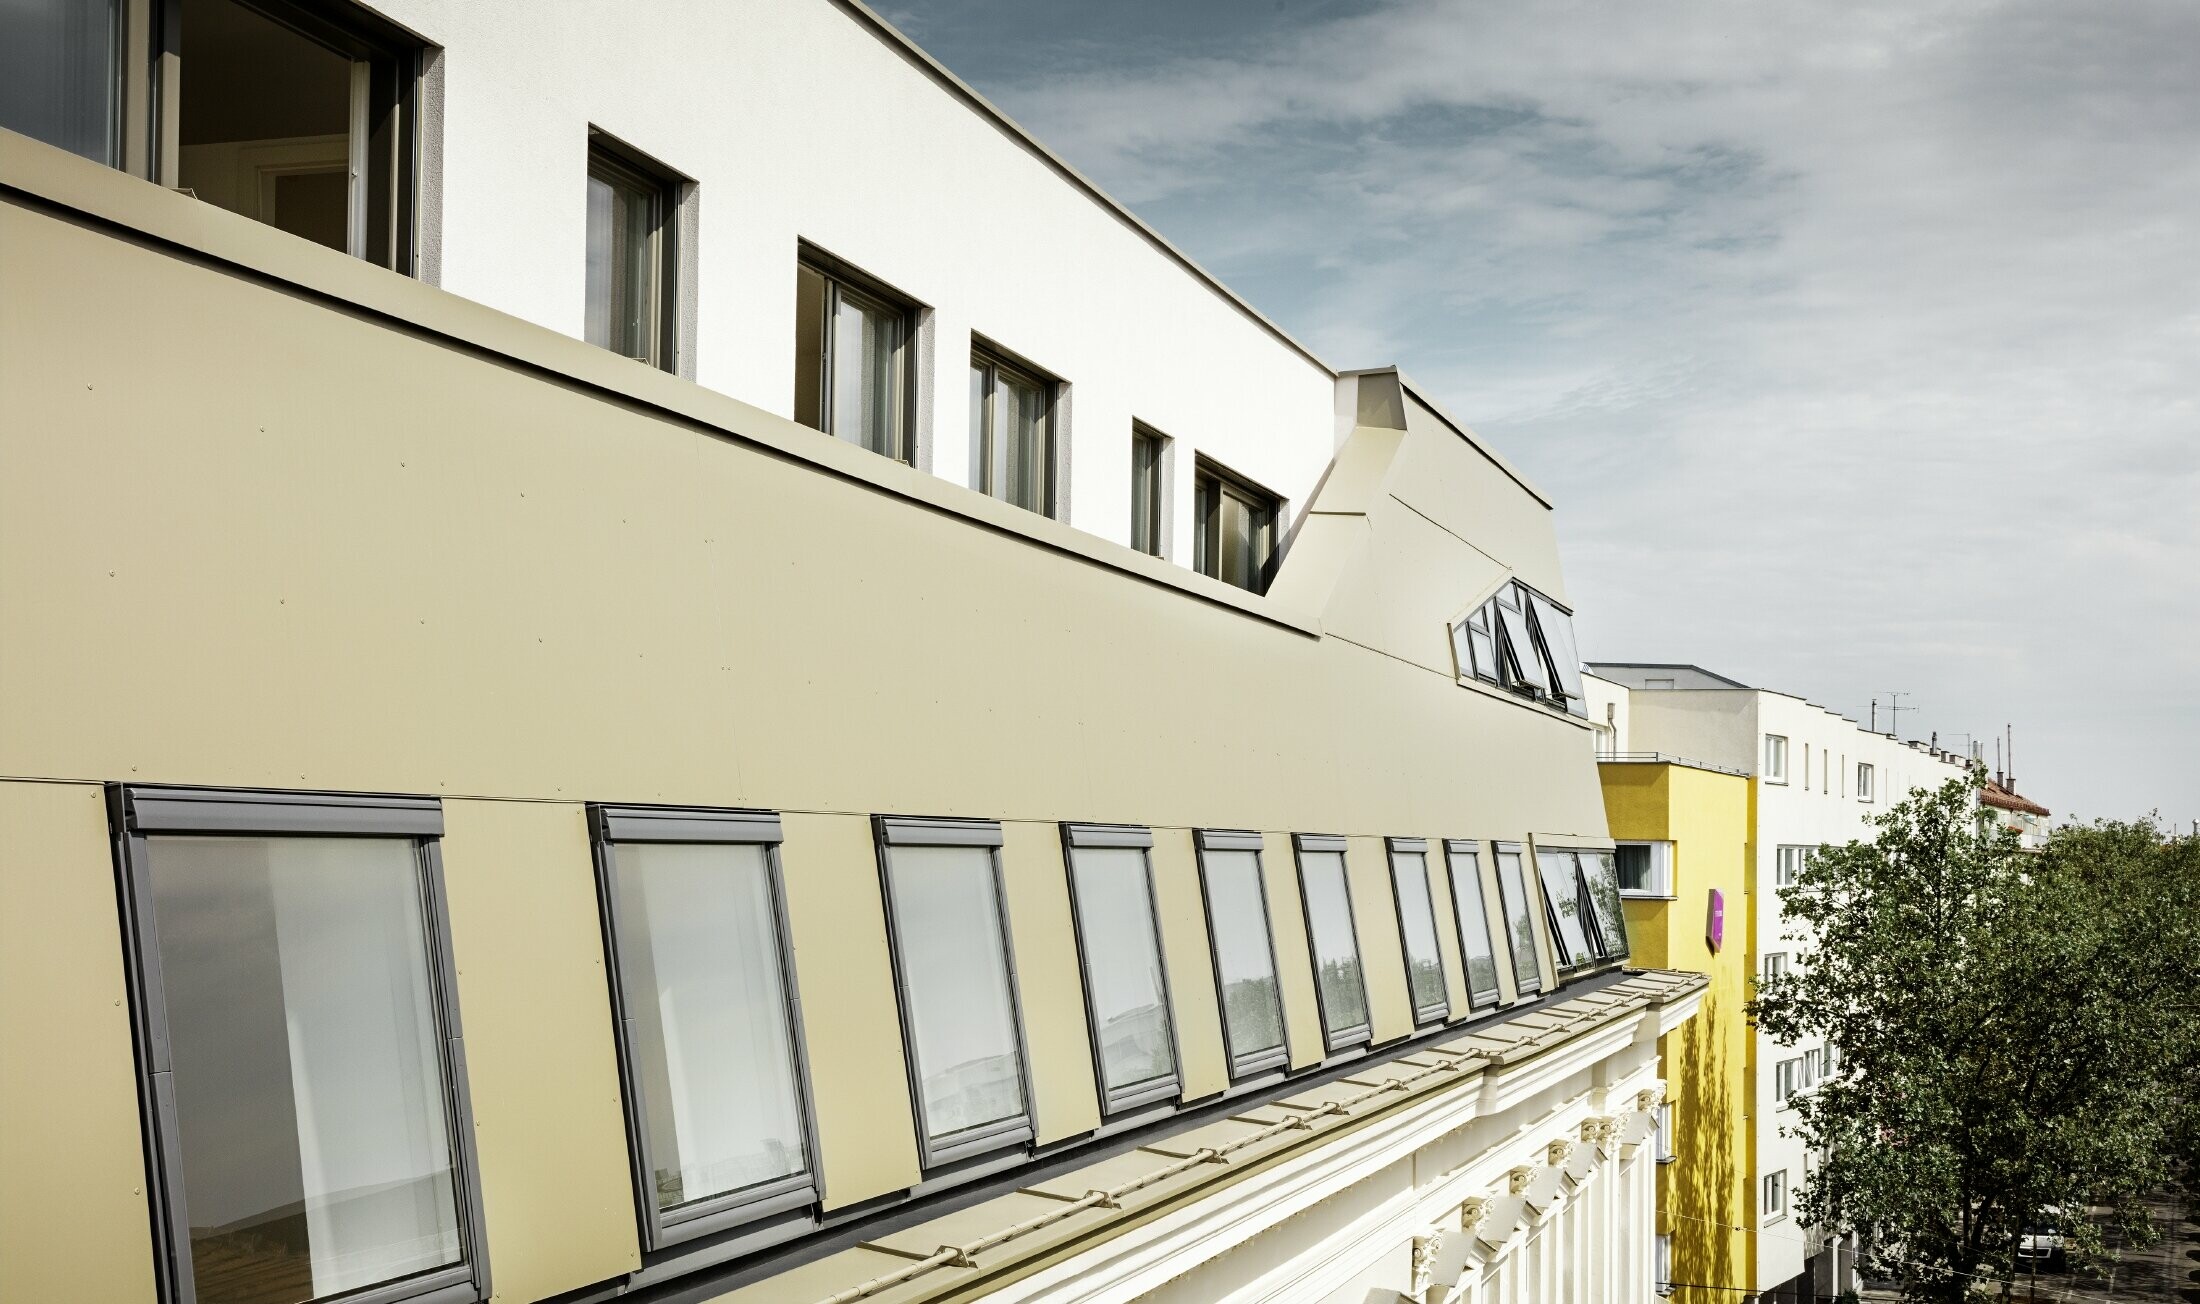 Roof extension in the Schloßhofer Straße in Vienna with PREFA aluminium composite panels in bronze